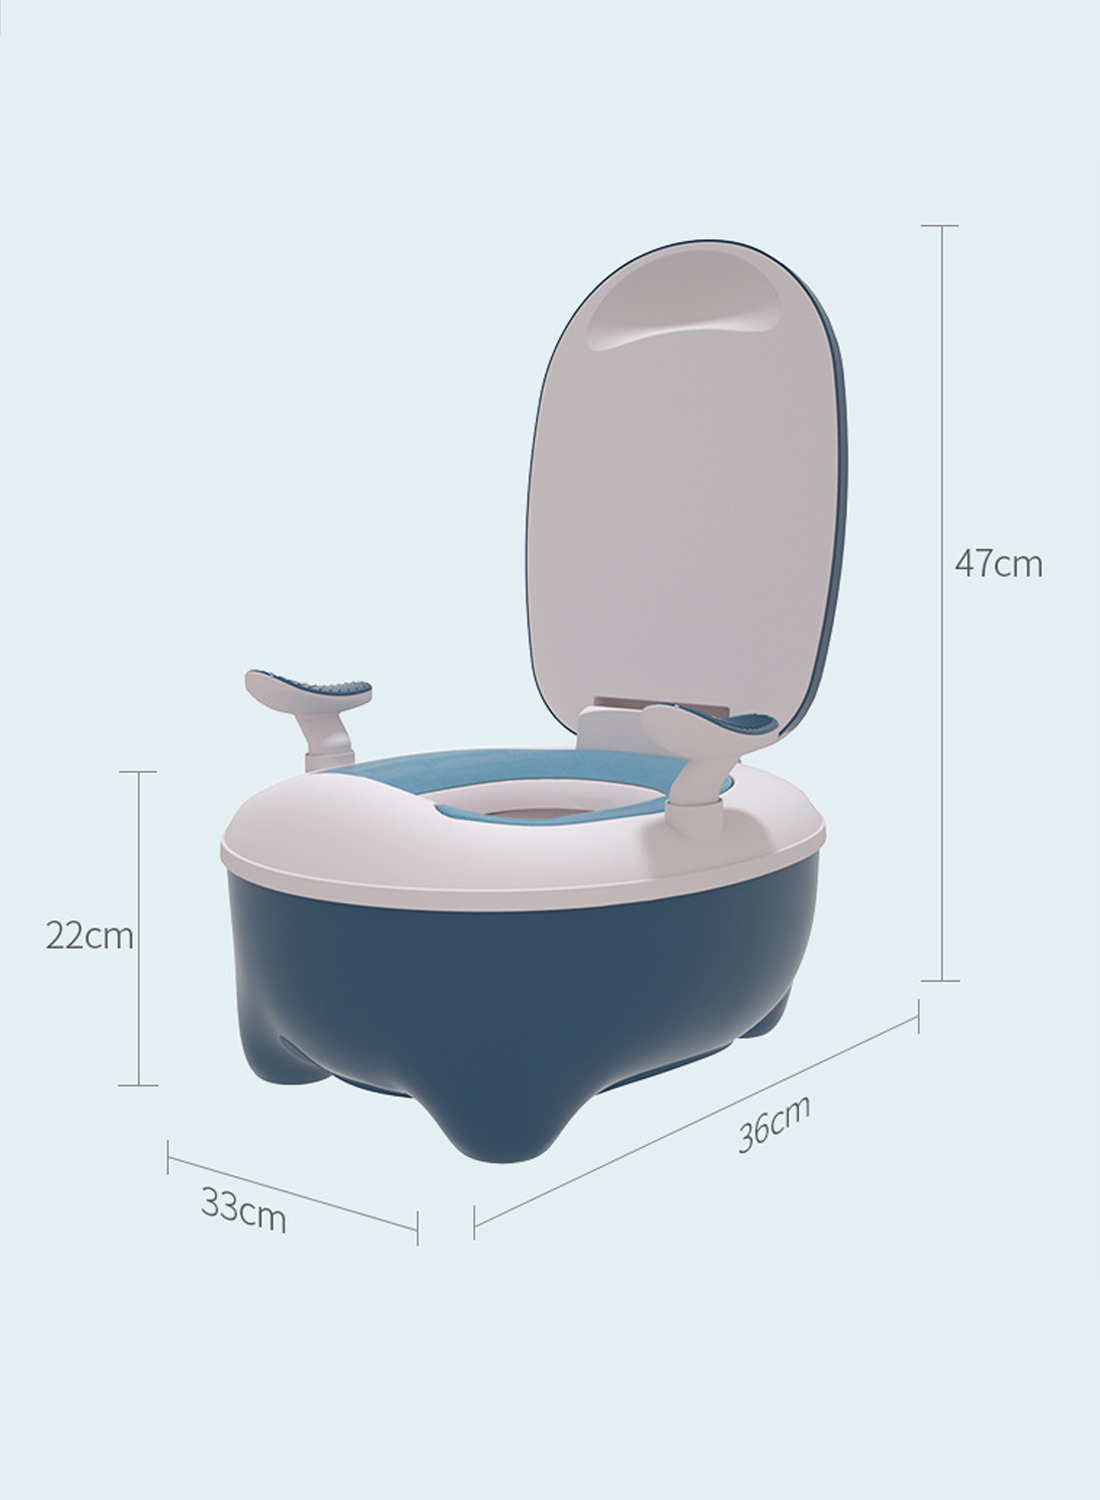 Children's Toilet Bowl for Boys and Girls